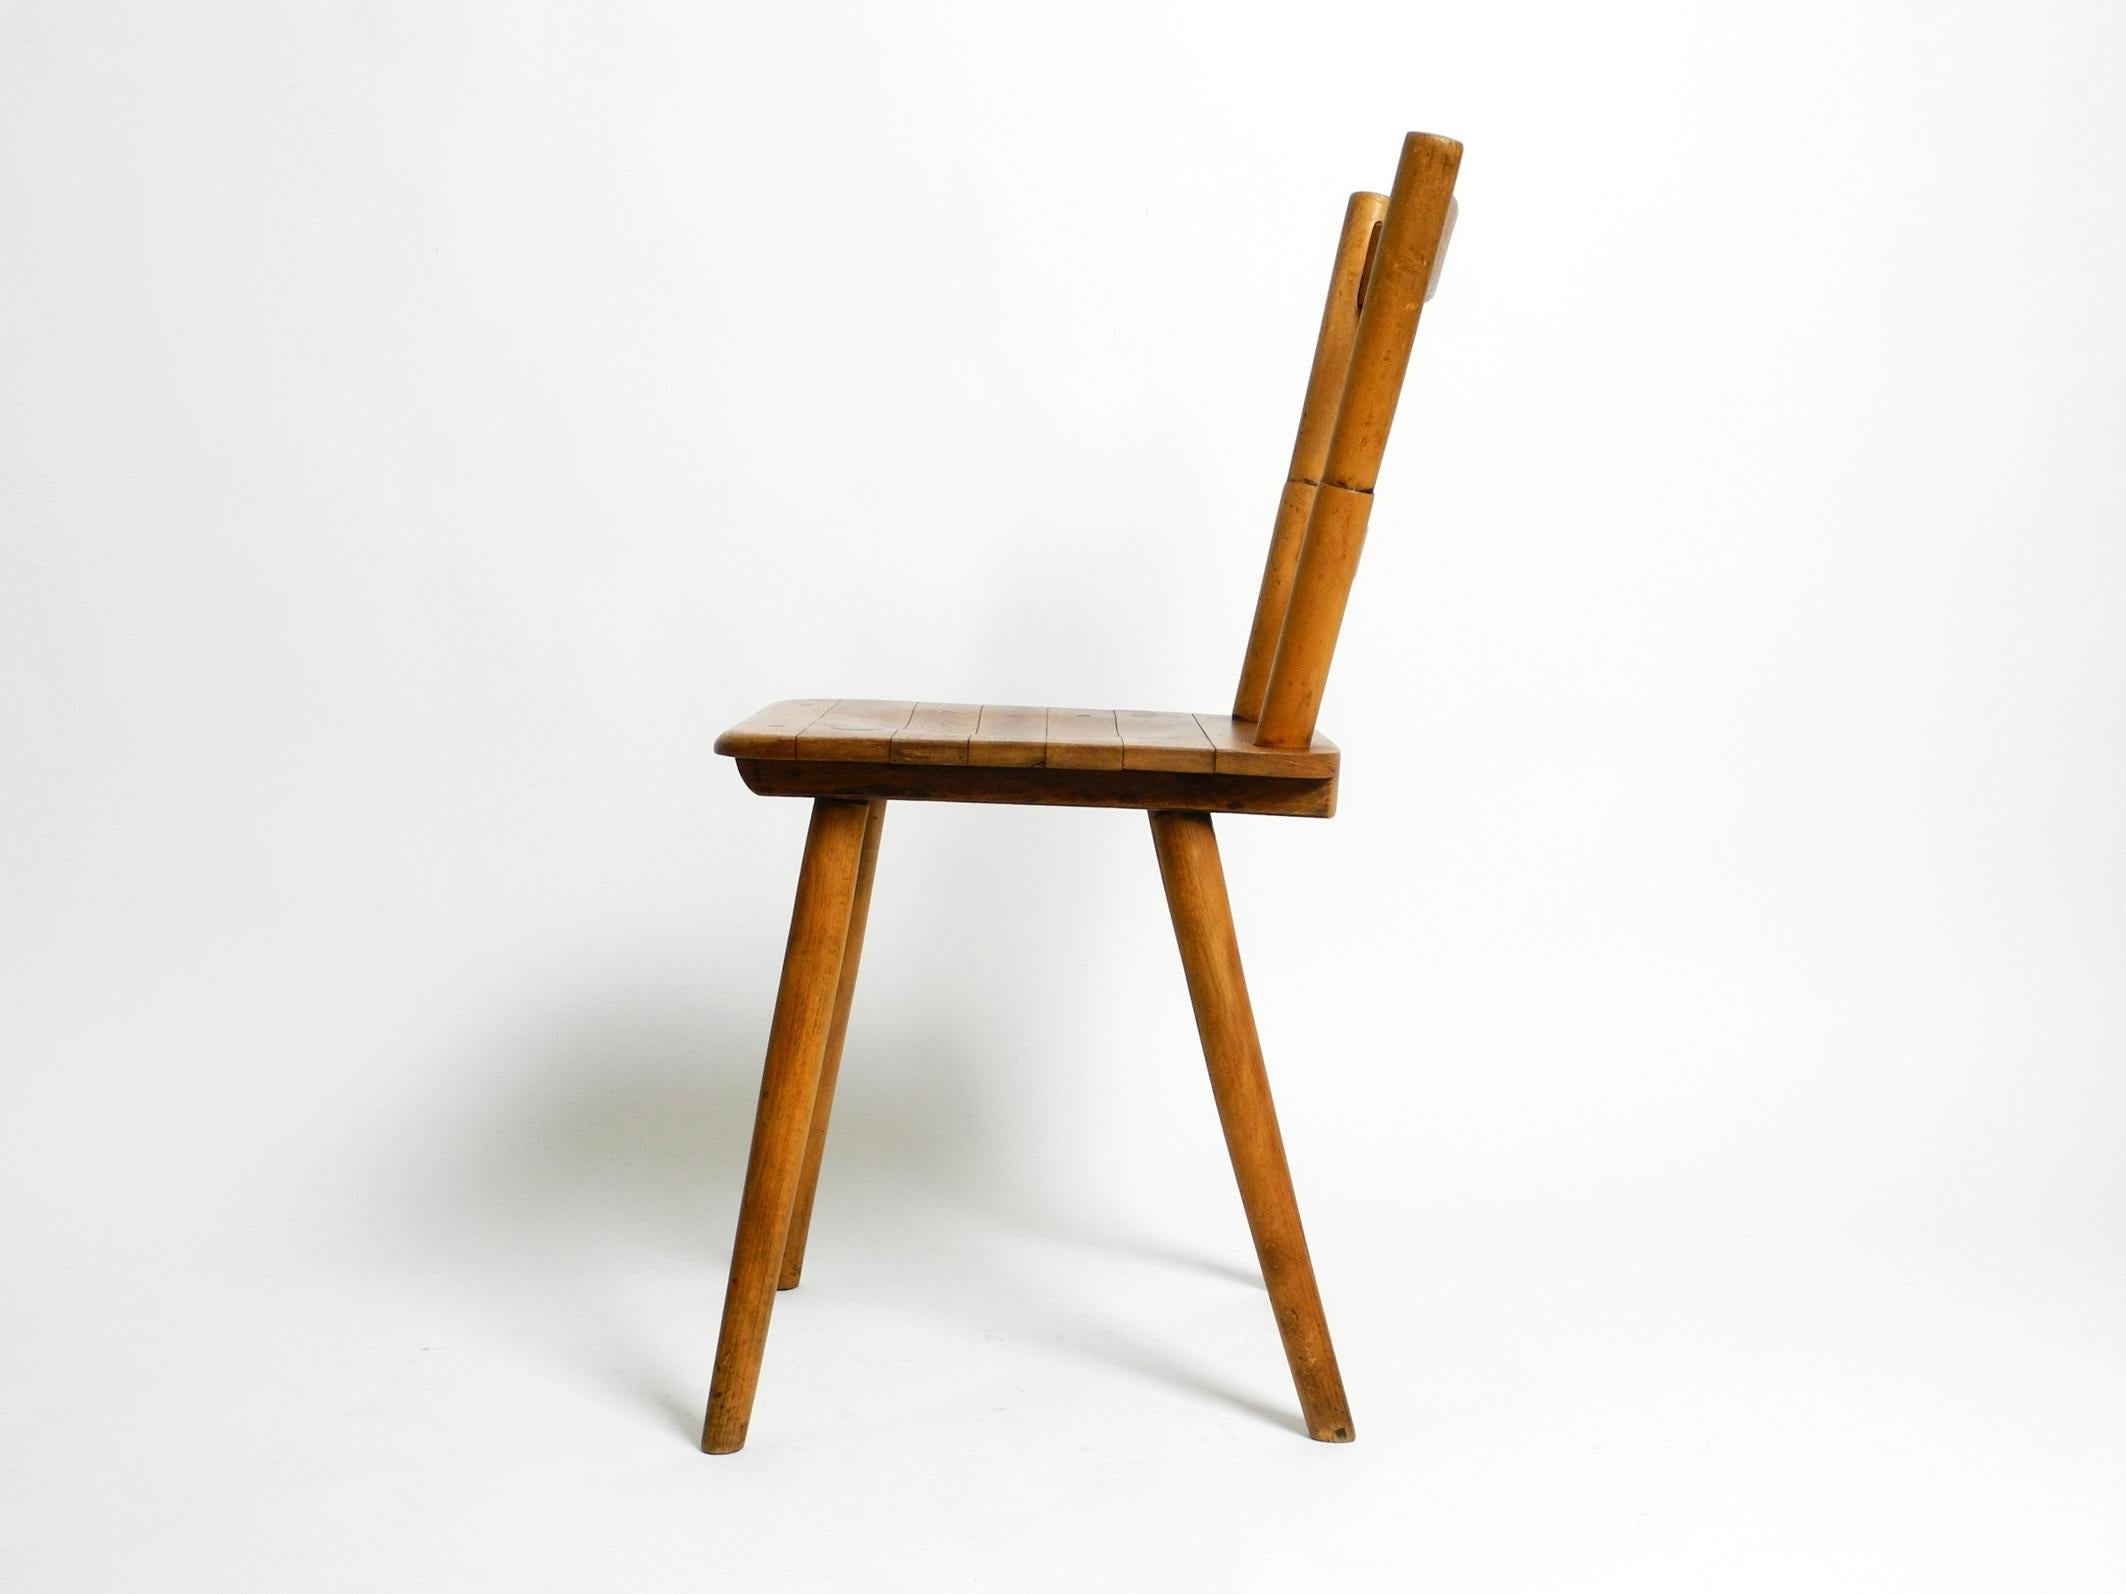 1930s Tübinger chair by the architect Prof. Adolf Gustav Schneck for Schäfer  For Sale 1